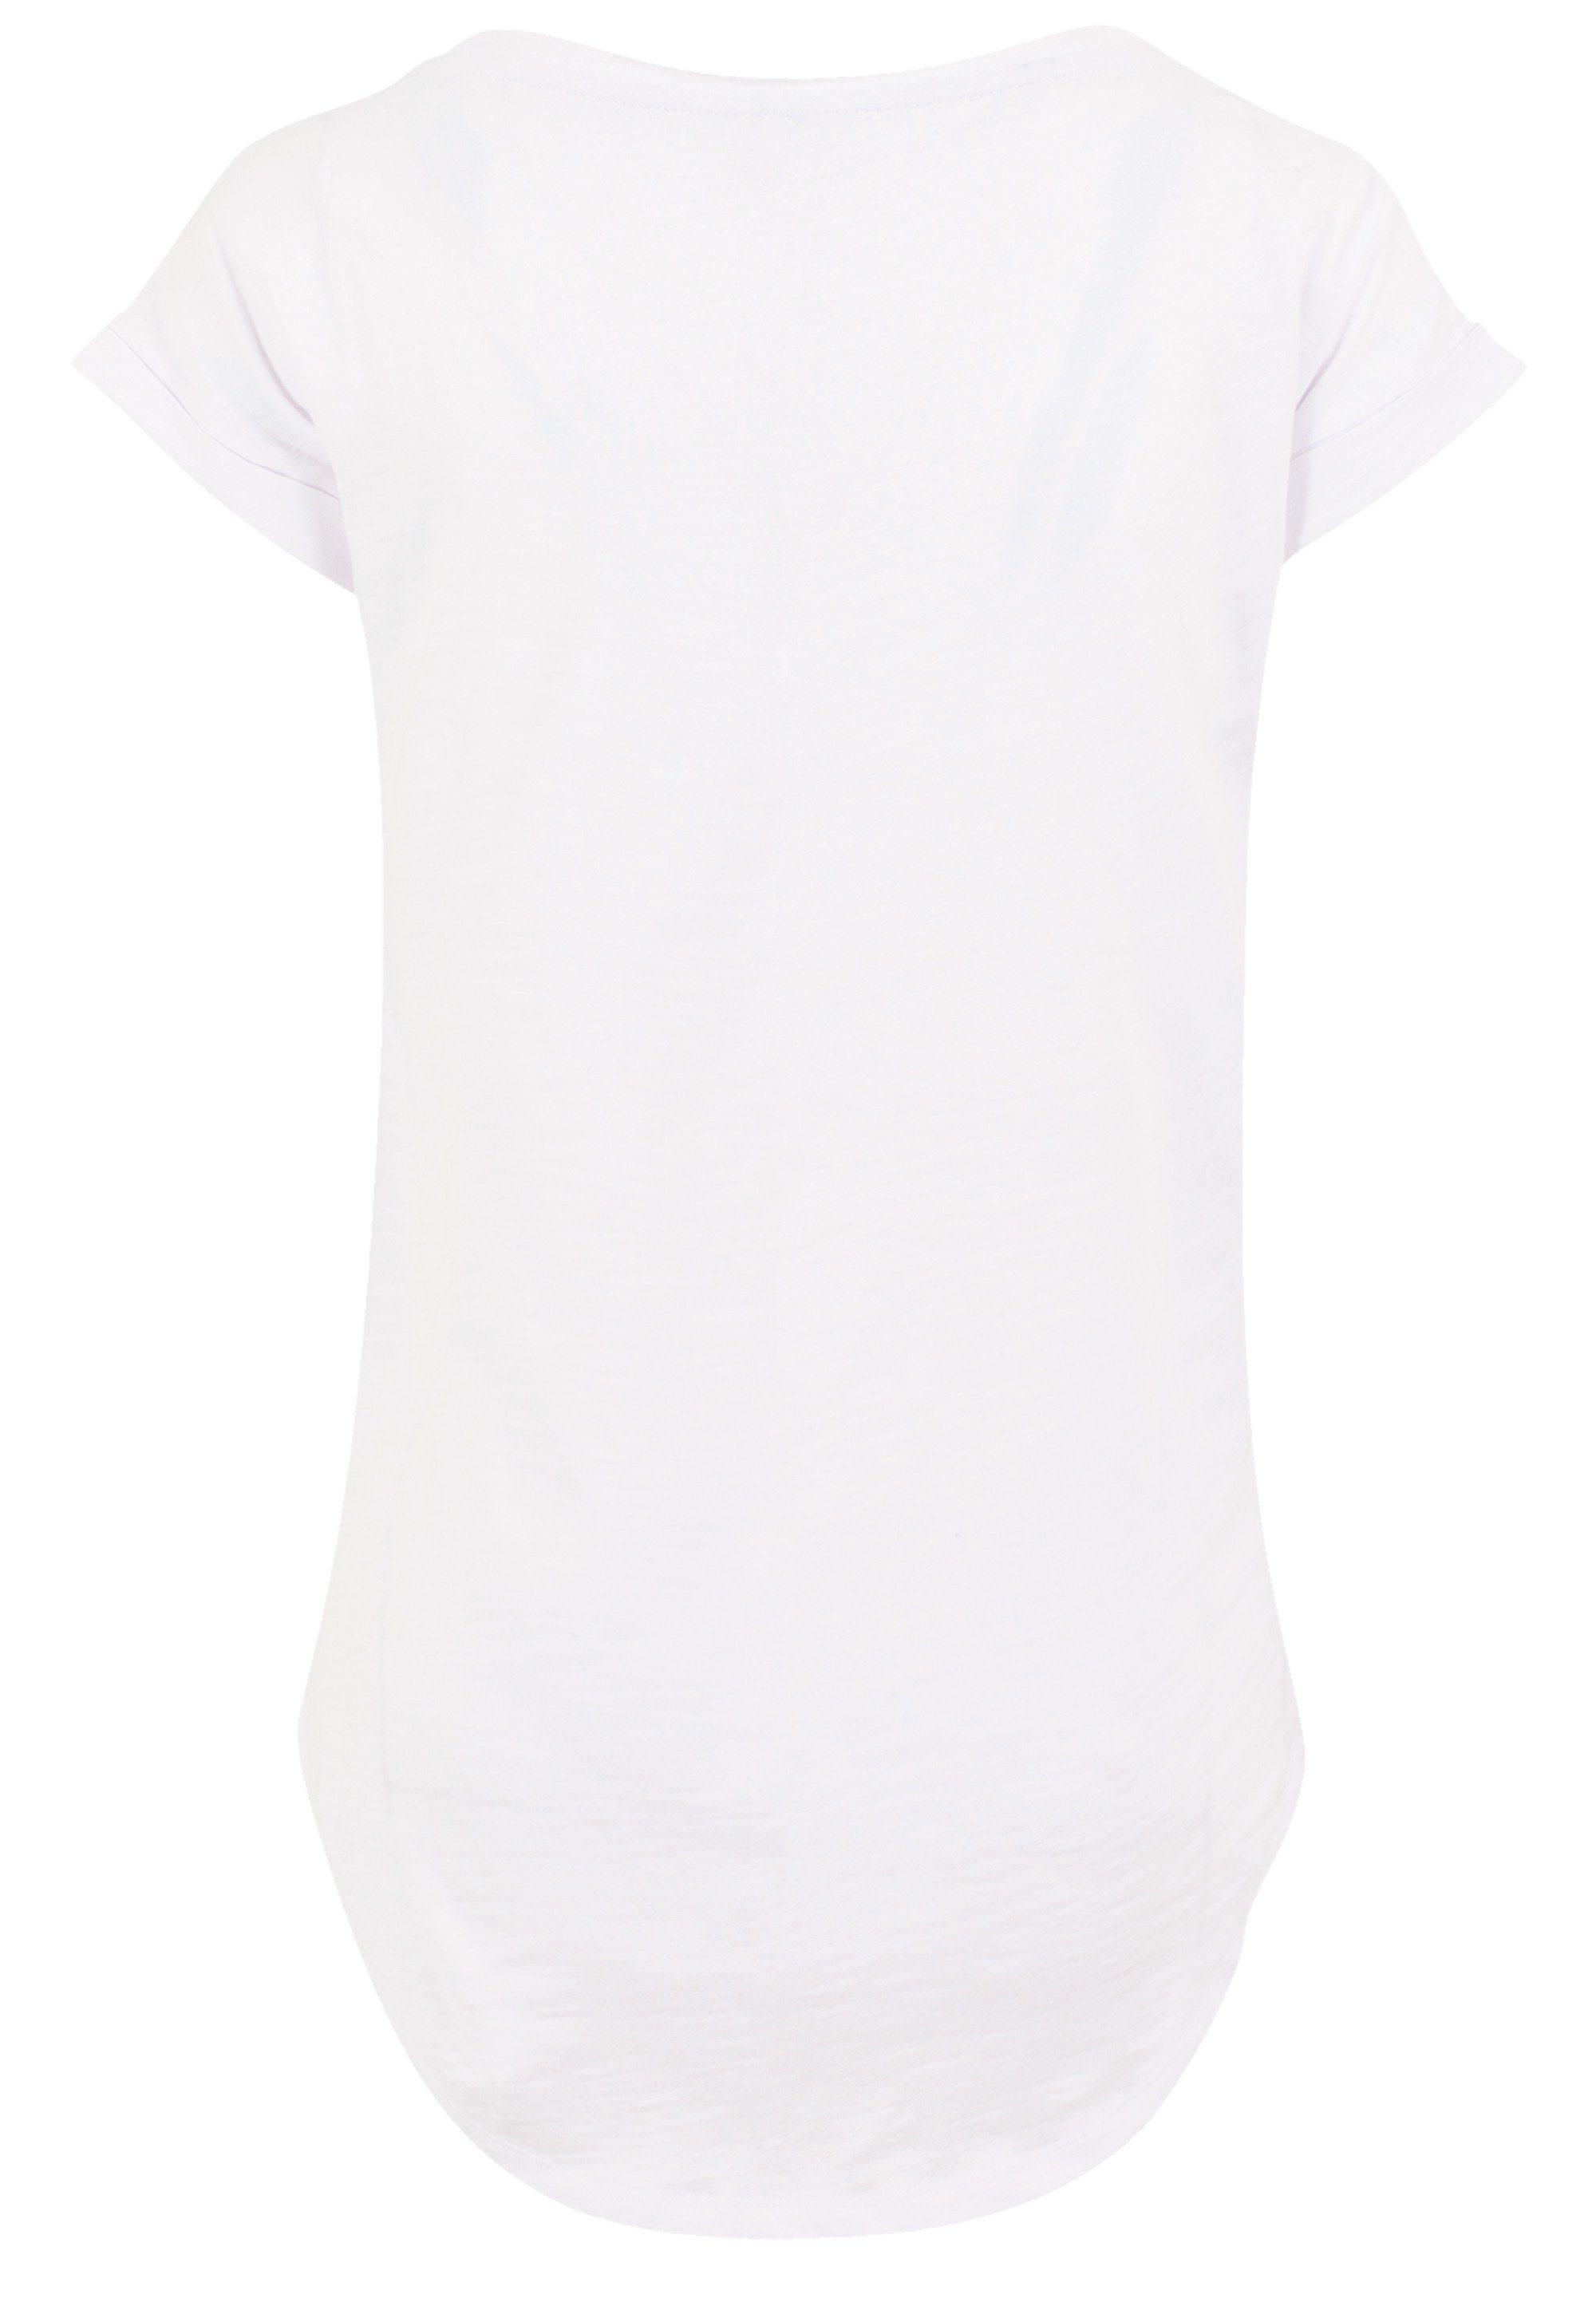 F4NT4STIC T-Shirt Star Wars Vintage Pride Premium Qualität, Hinten extra  lang geschnittenes Damen T-Shirt